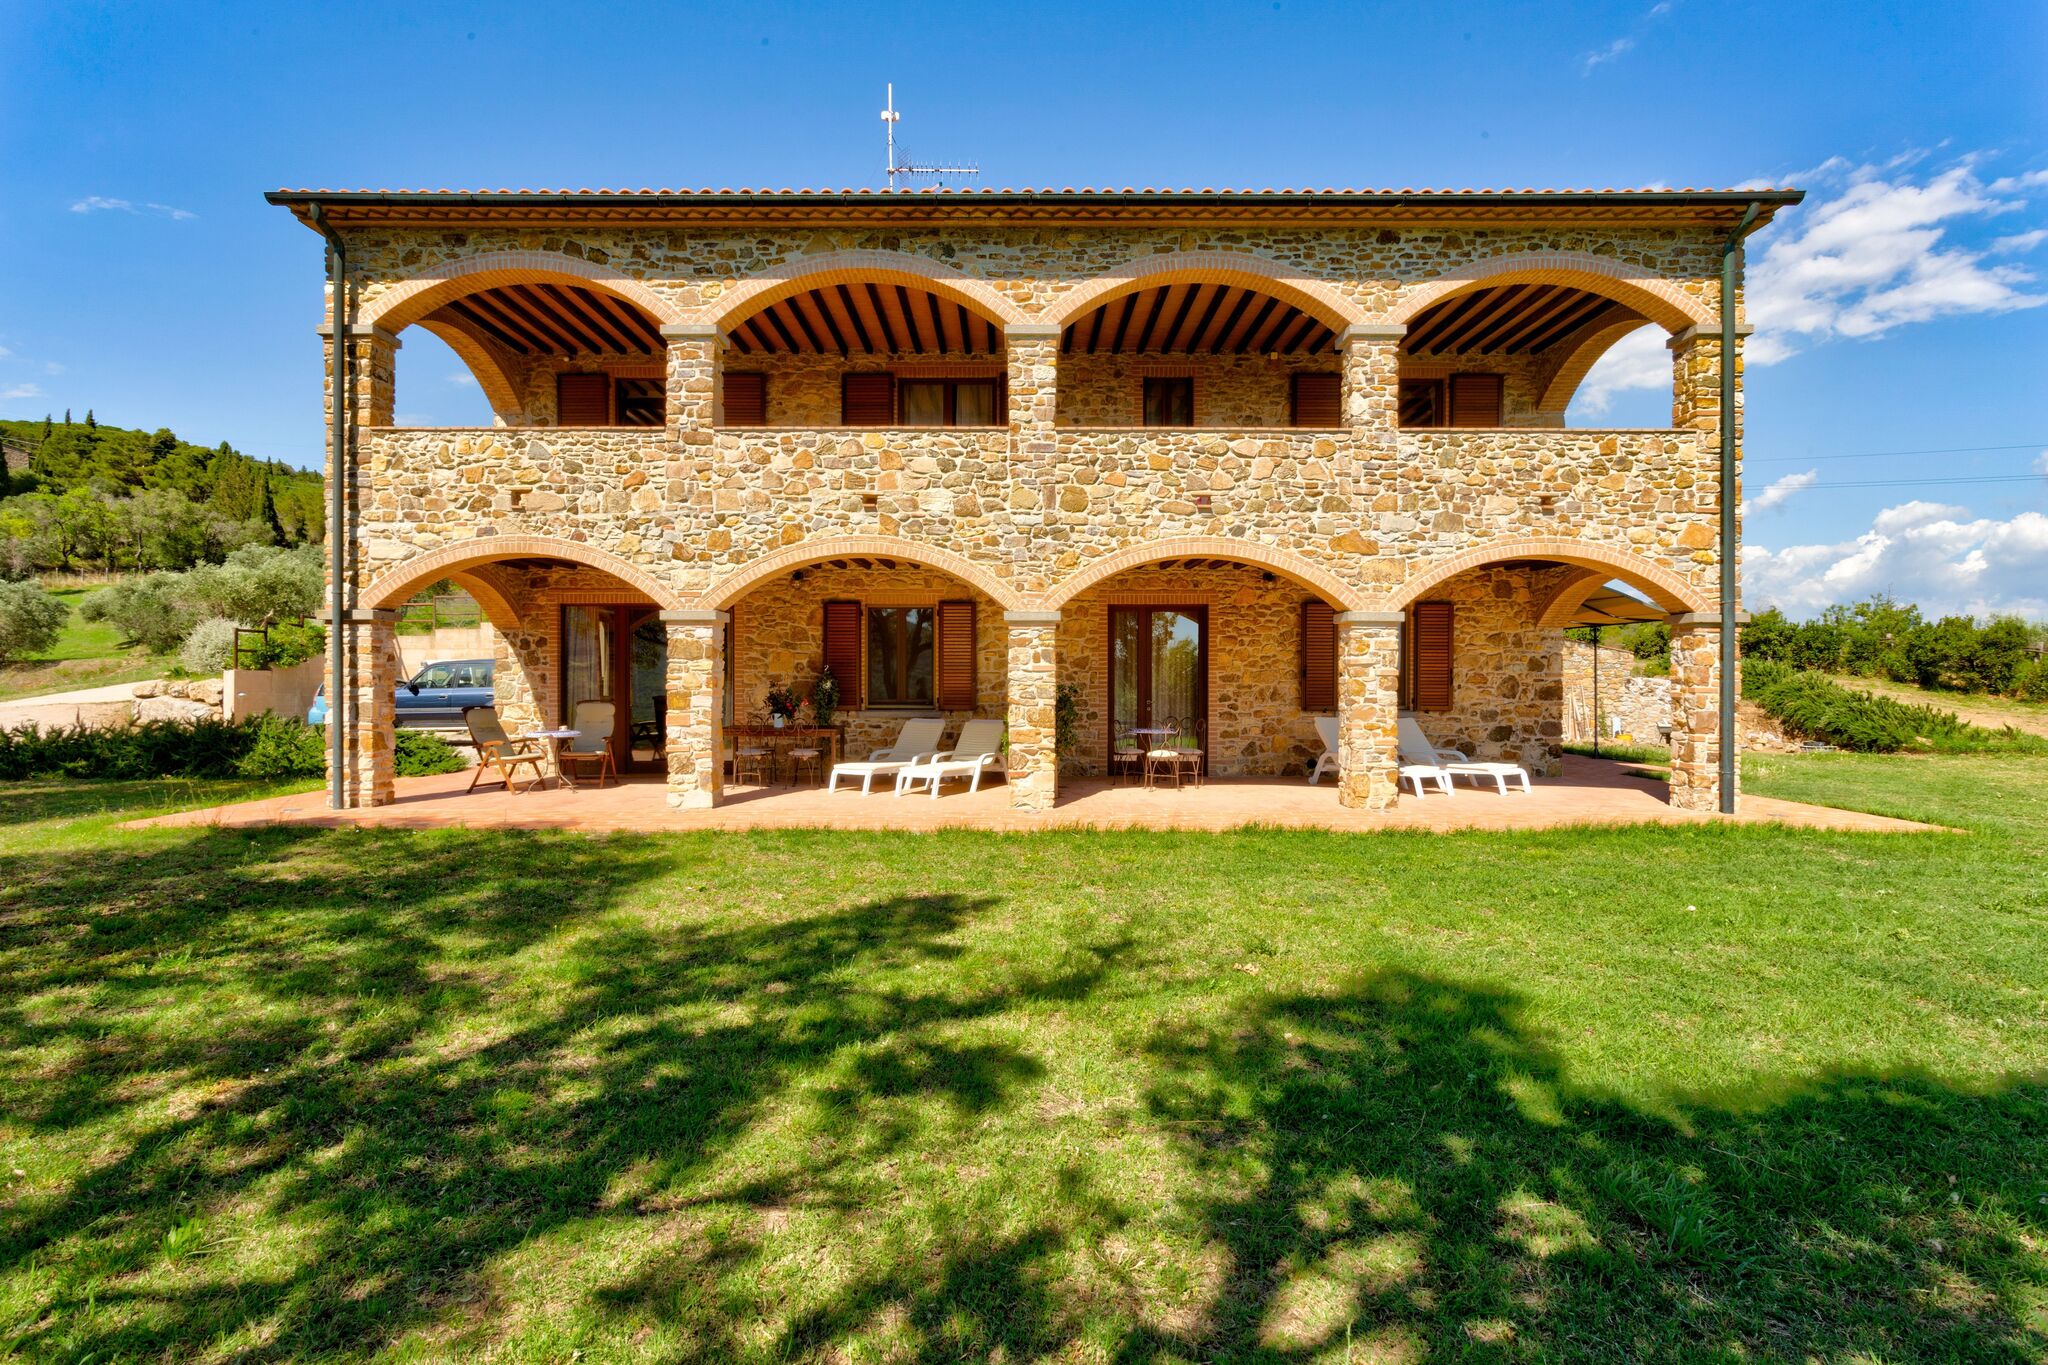 Privates Ferienhaus in Suvereto, Toskana mit Olivenbäumen